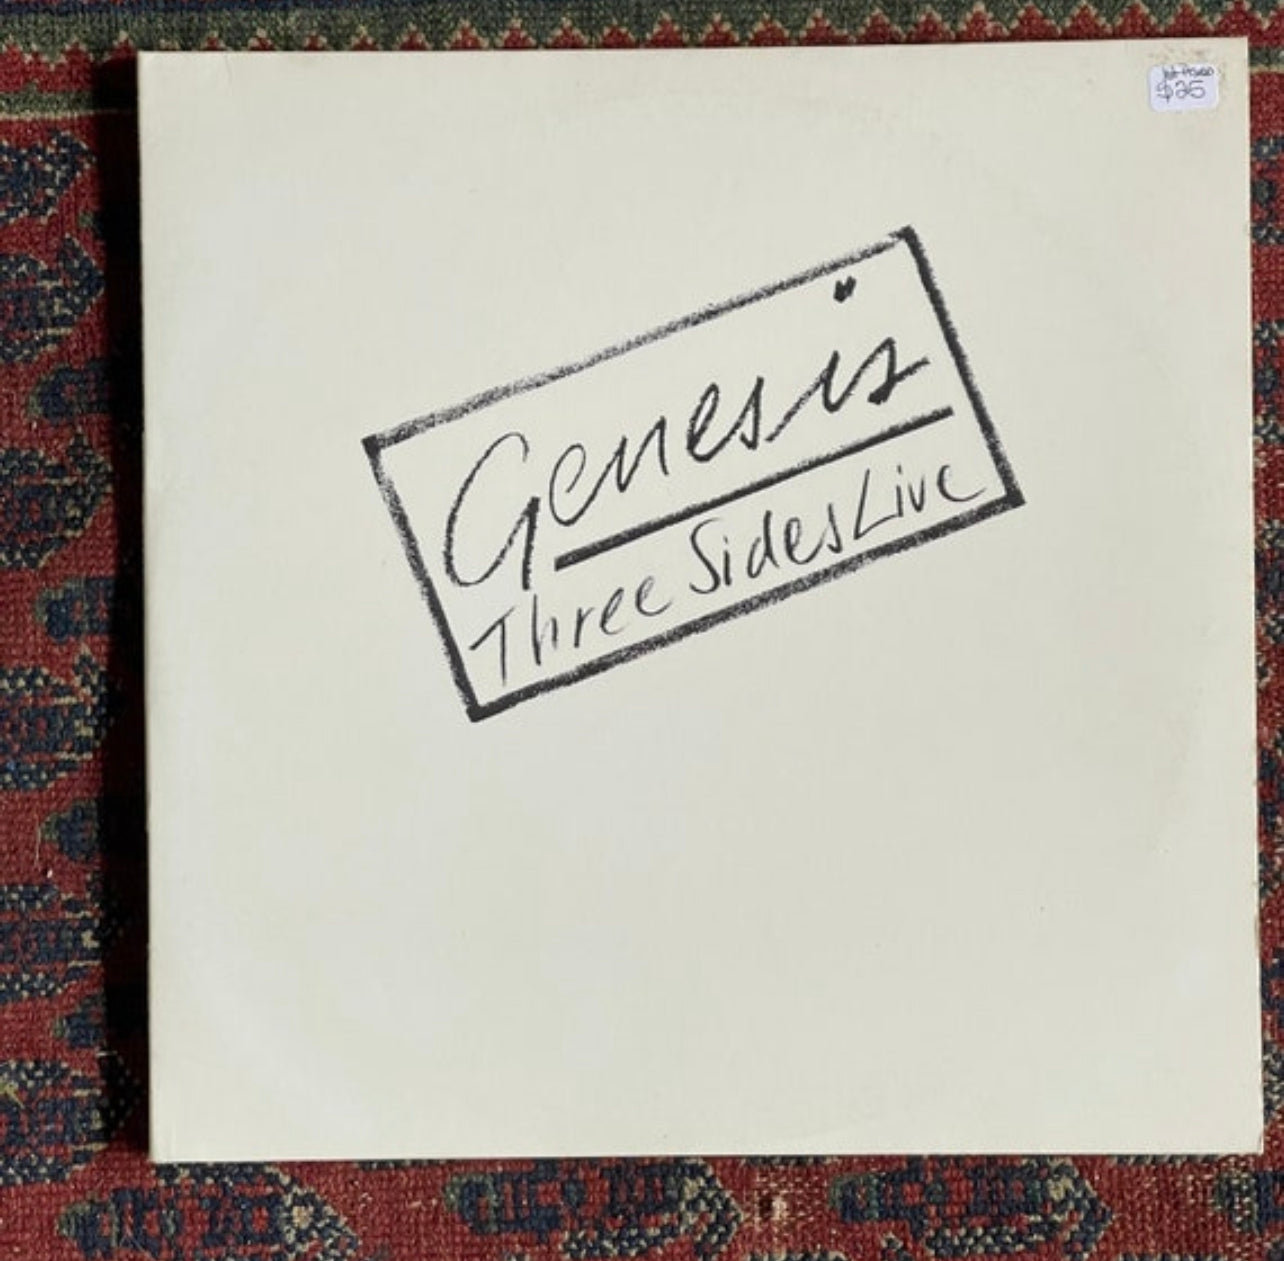 Genesis-Three Sides Live